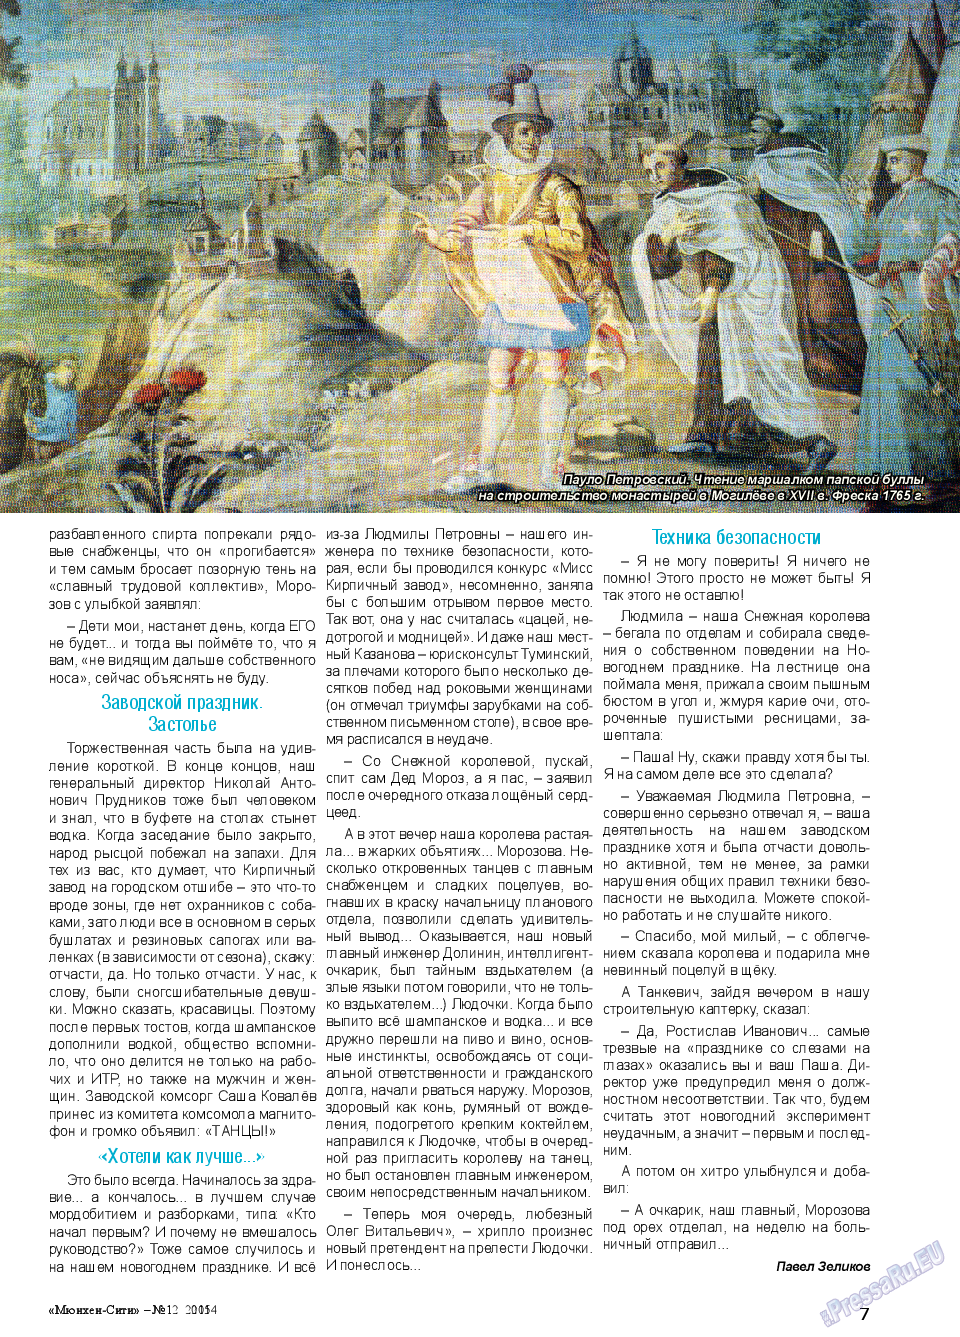 Мюнхен-сити, журнал. 2015 №1 стр.7